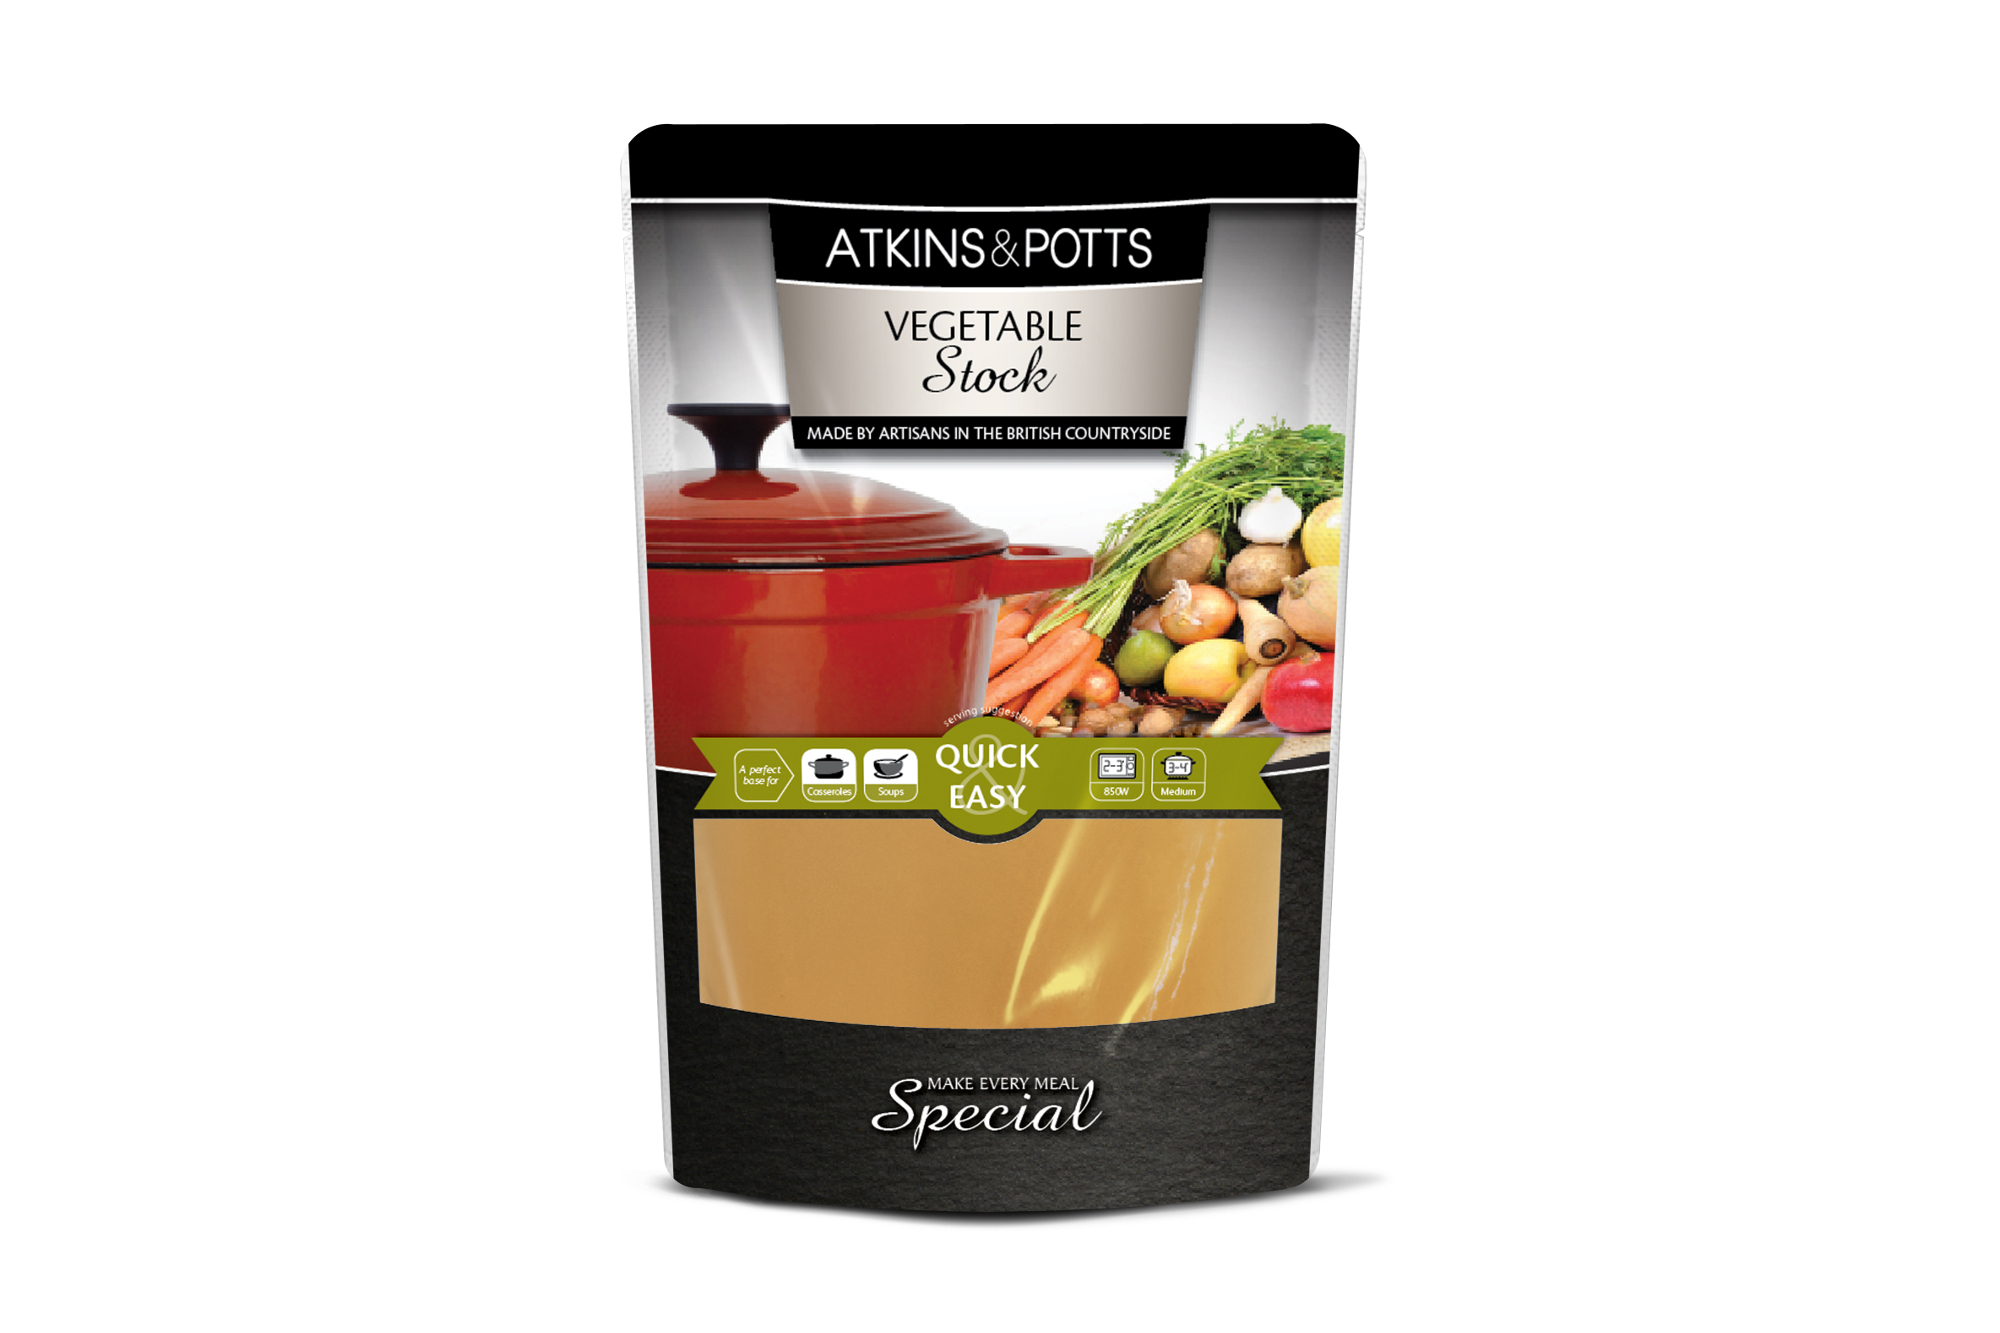 Atkins & Potts Vegetable Stock